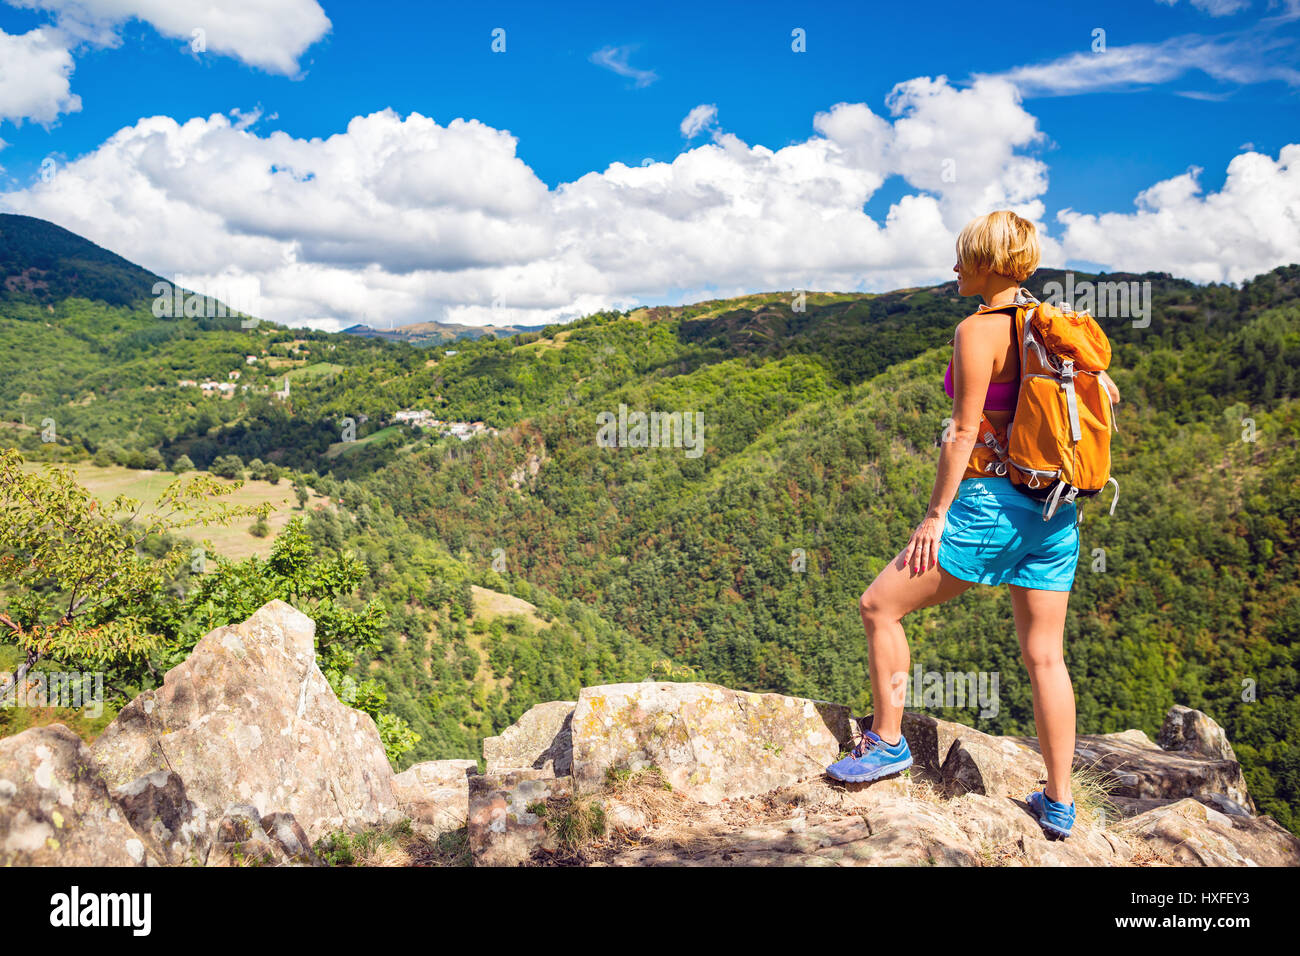 Hiking woman